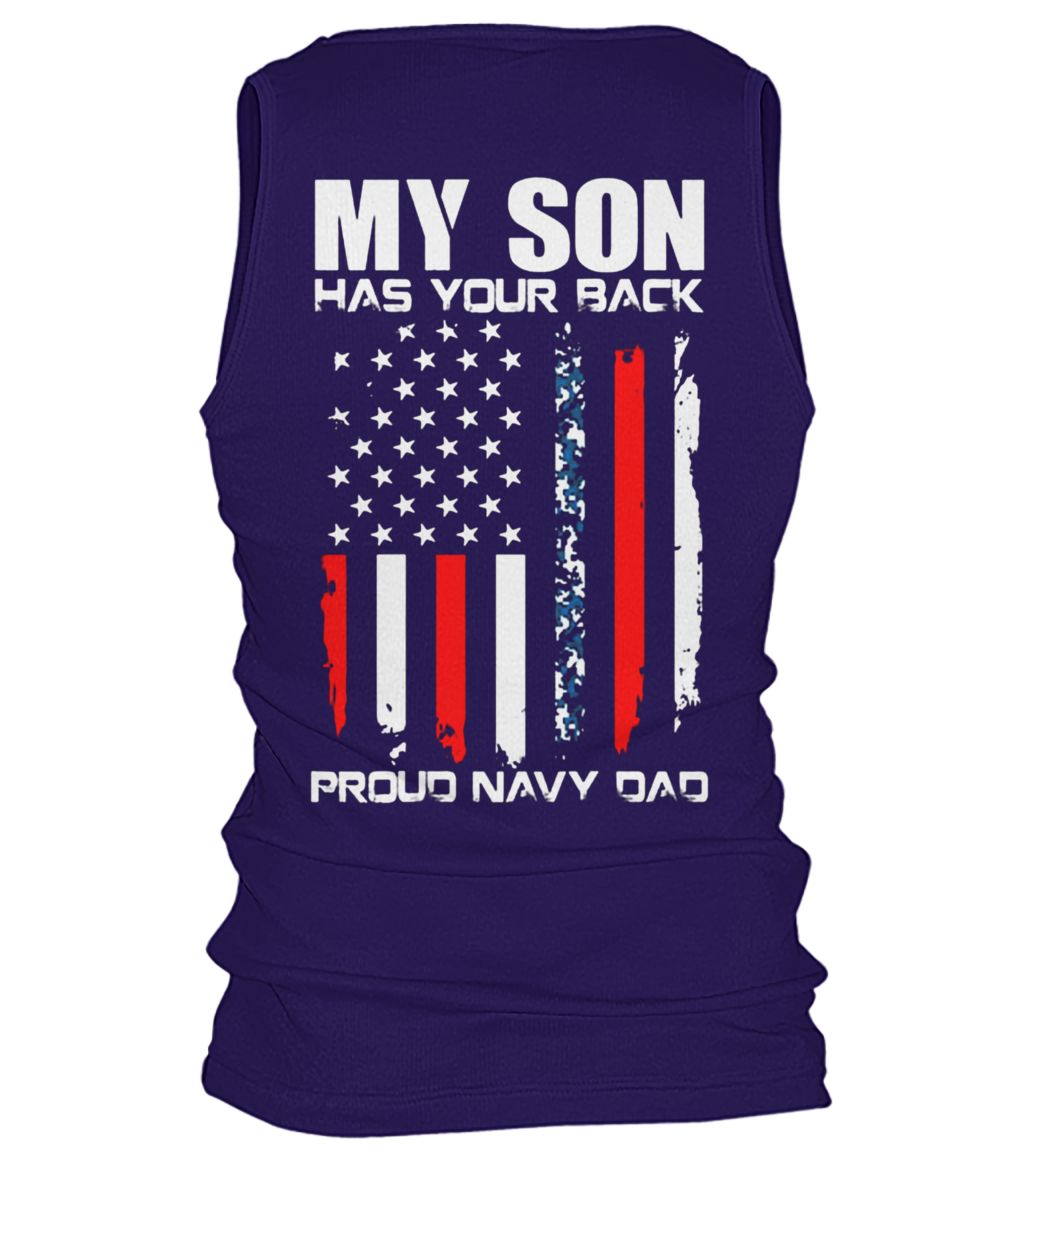 My son has your back proud navy dad men's tank top